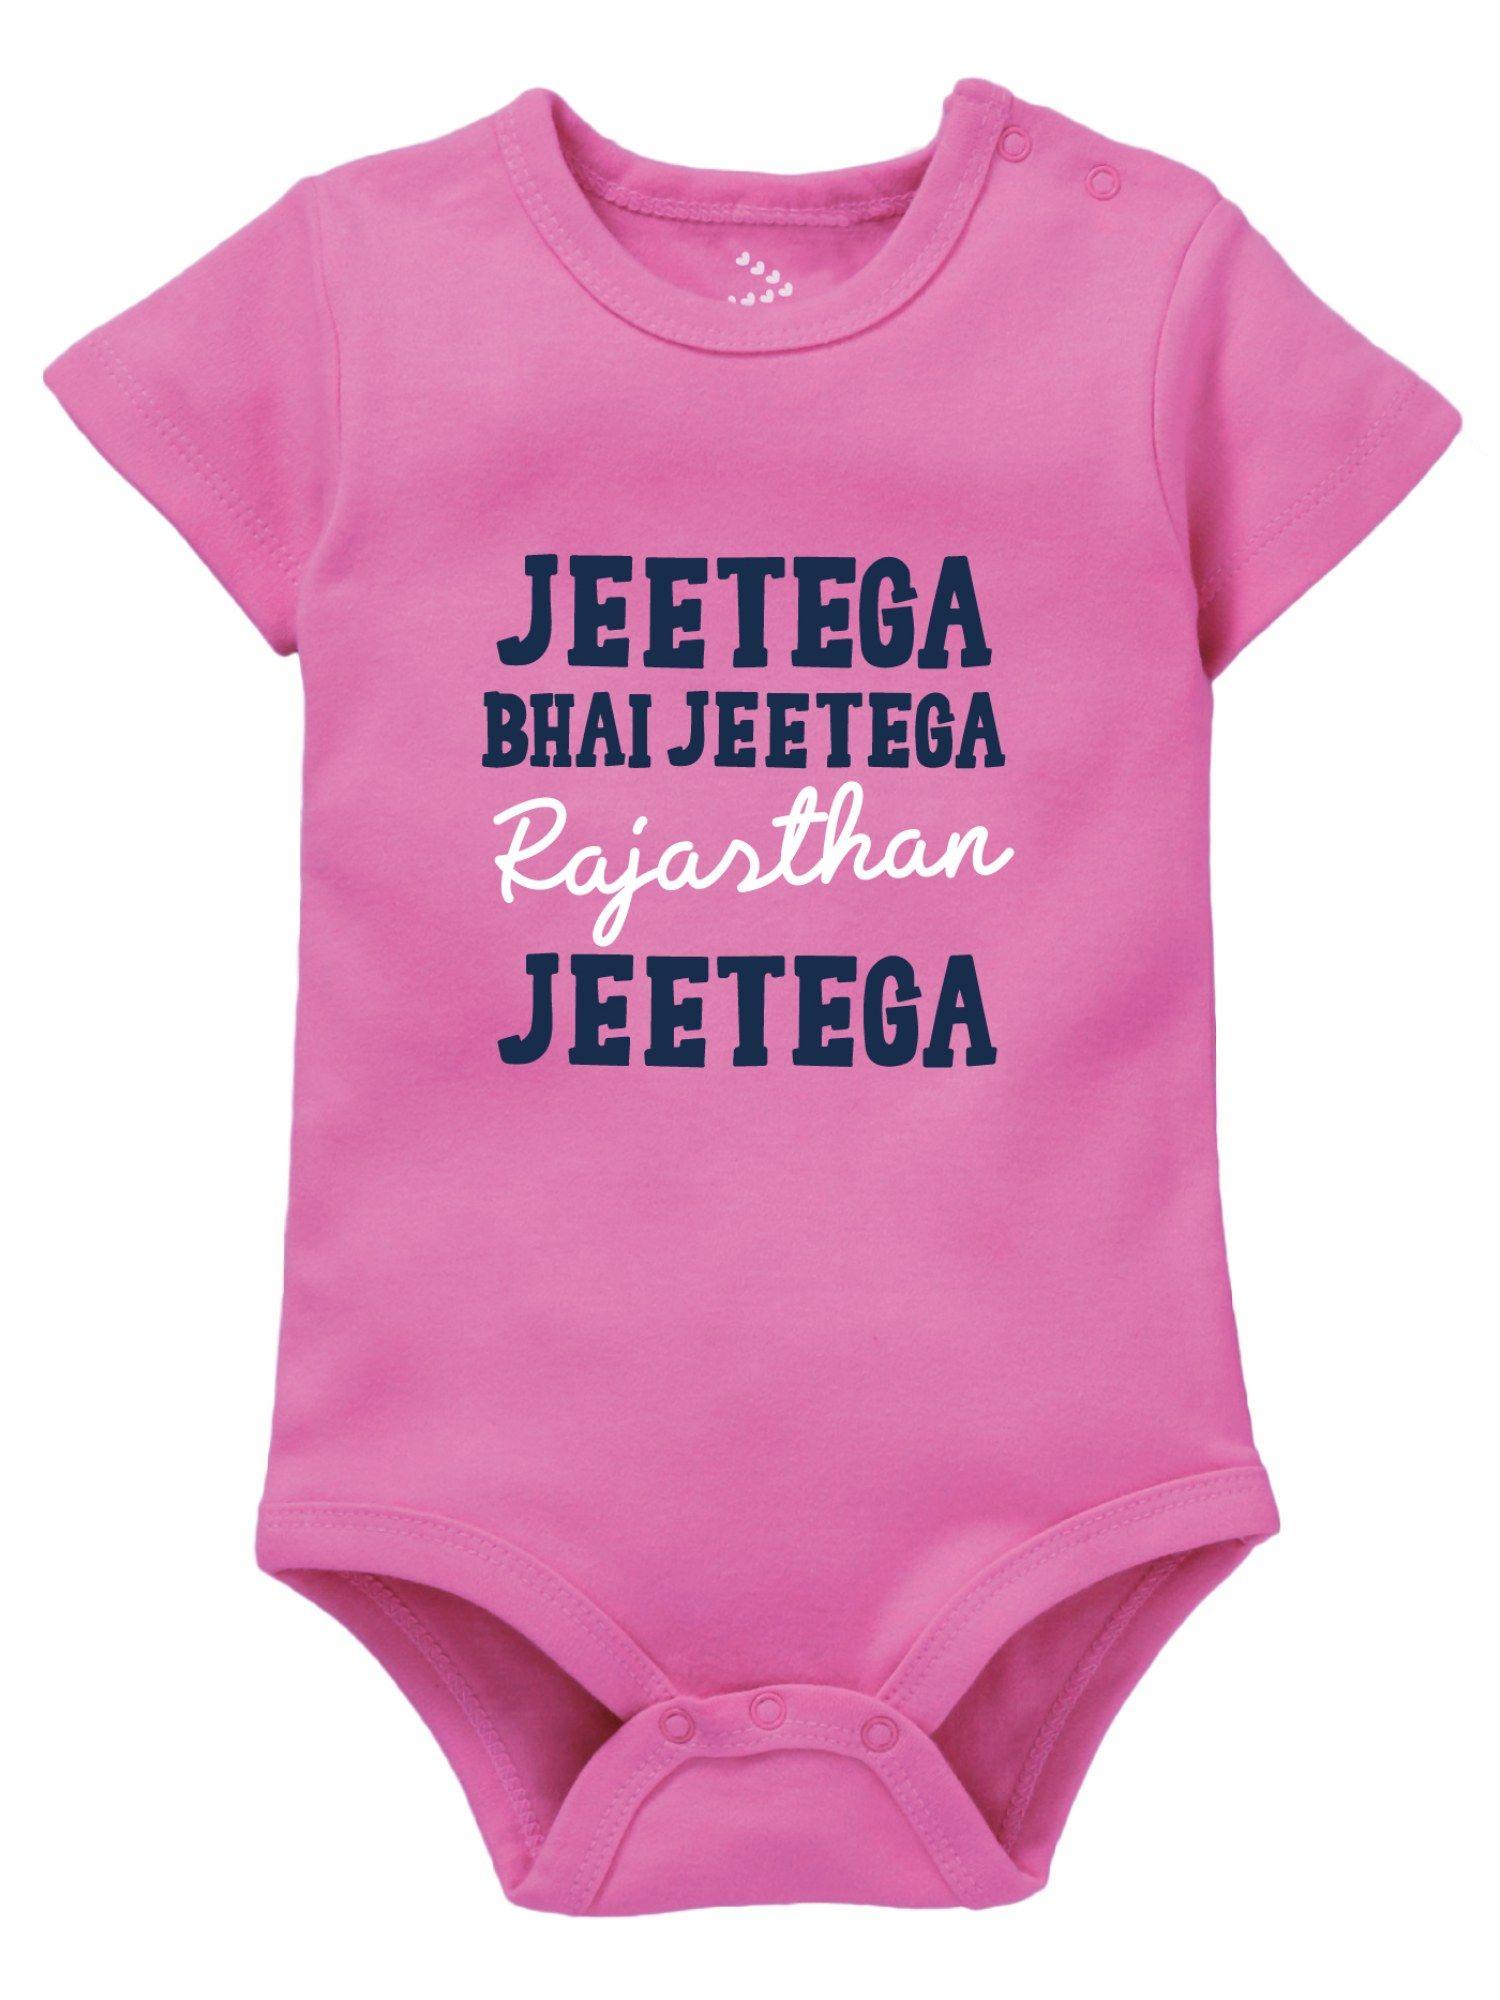 cricket-baby-rr-bodysuit-jeetega-rajasthan-jeetega-pink